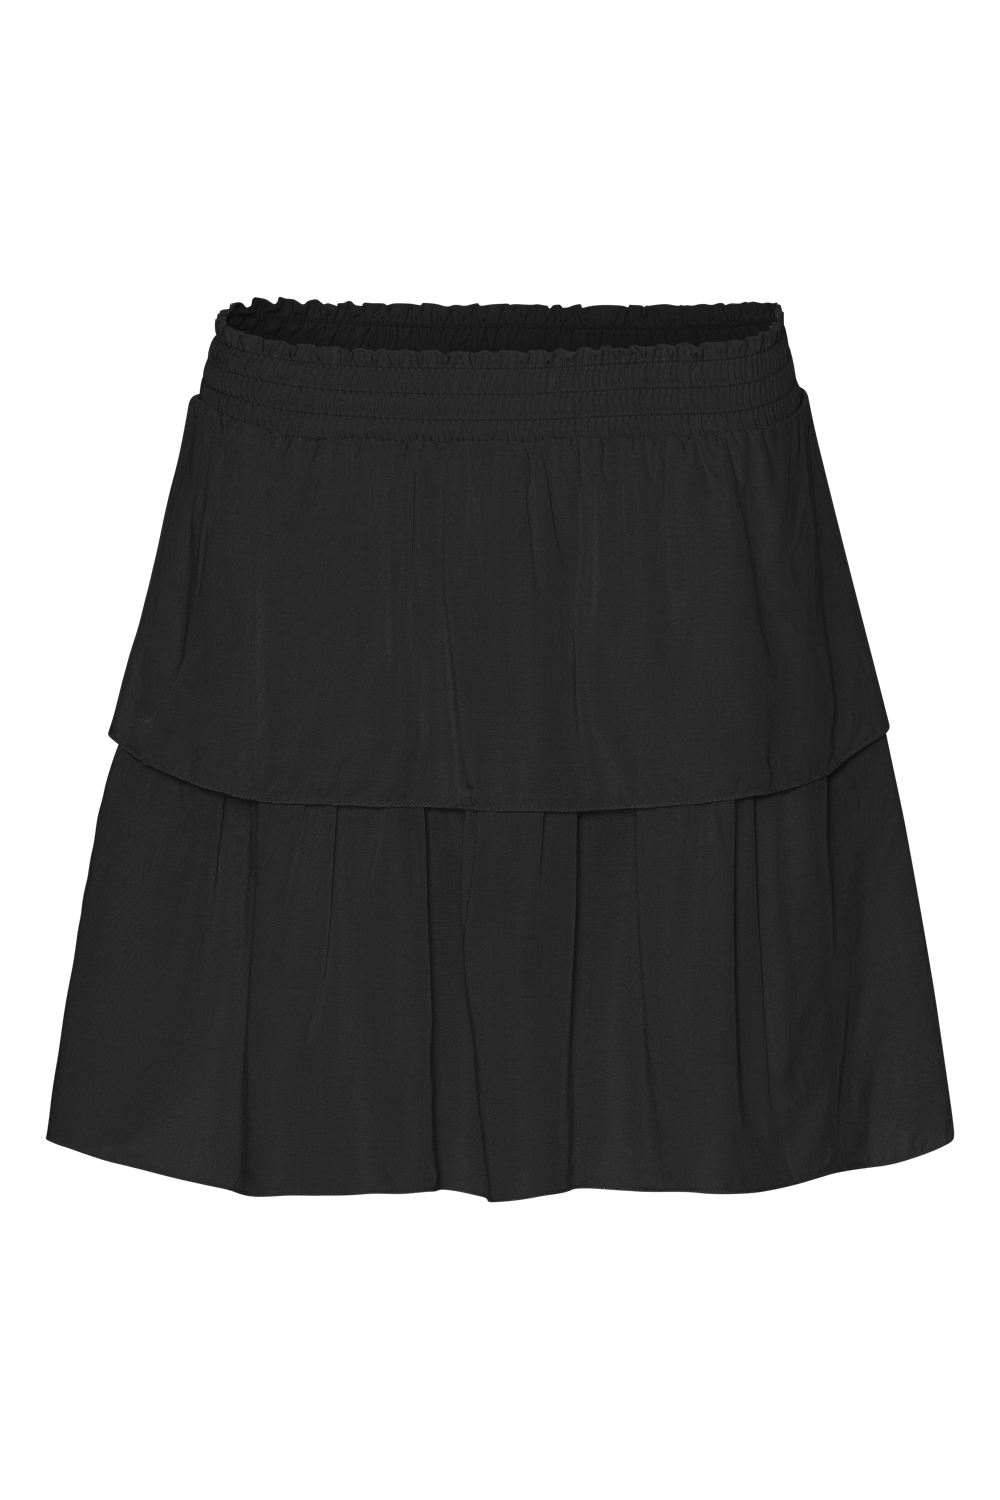 Sally Short Skirt Solid Black